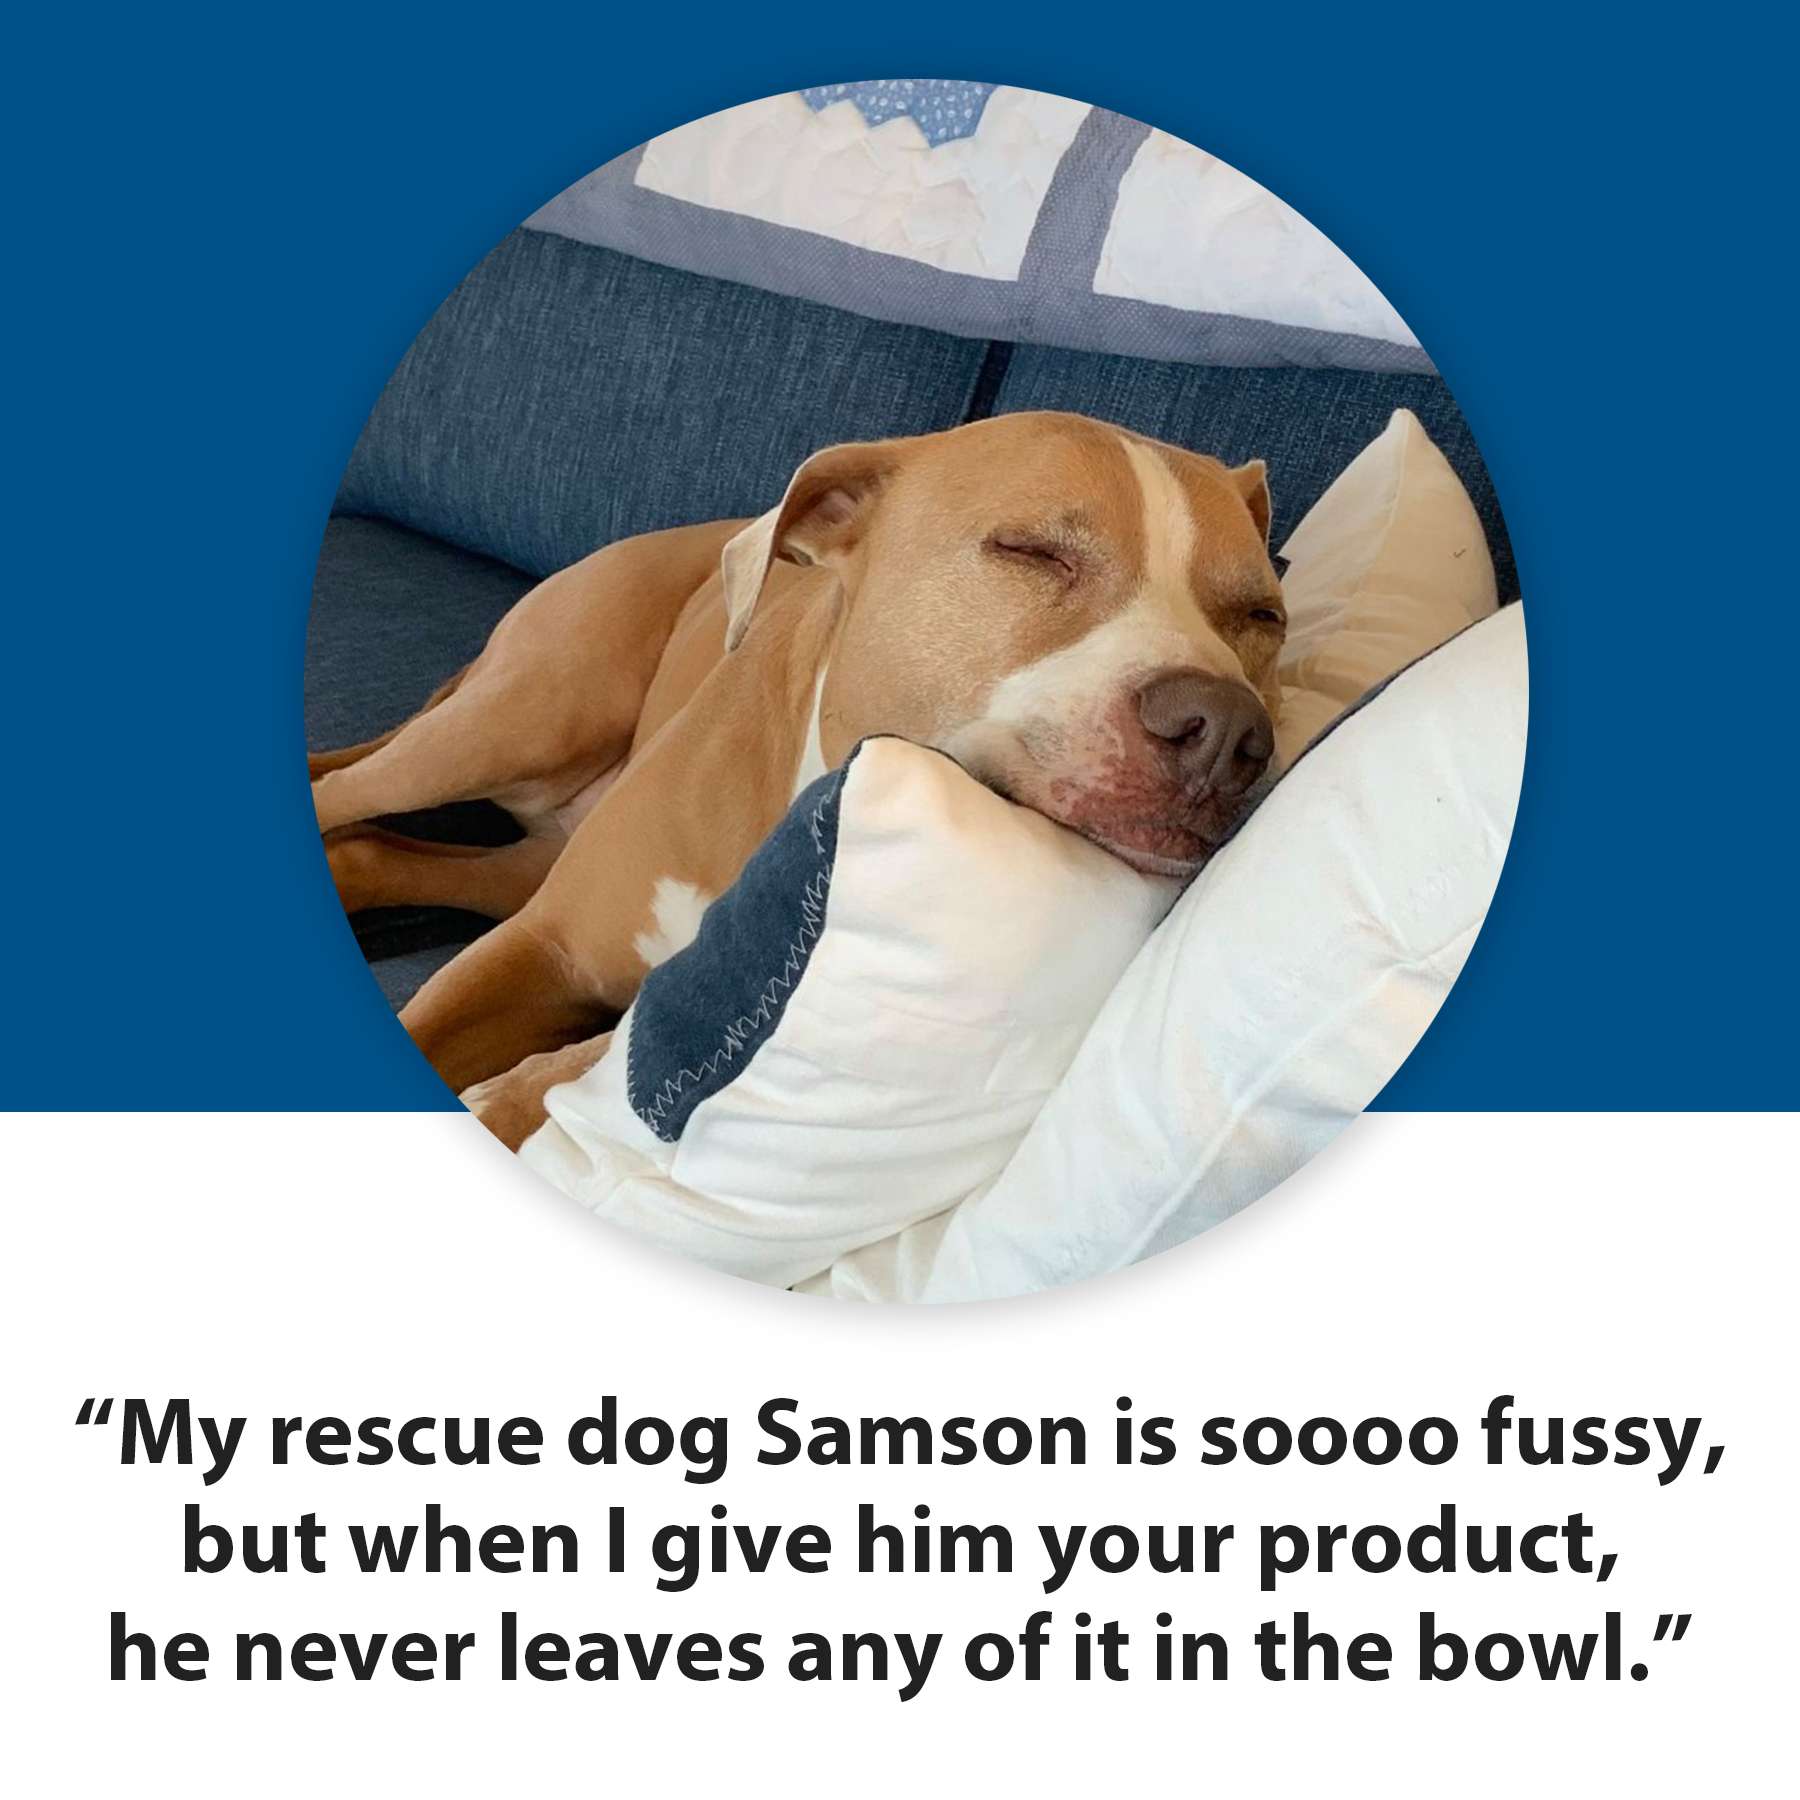 Testimonial of Samson, asleep on the couch